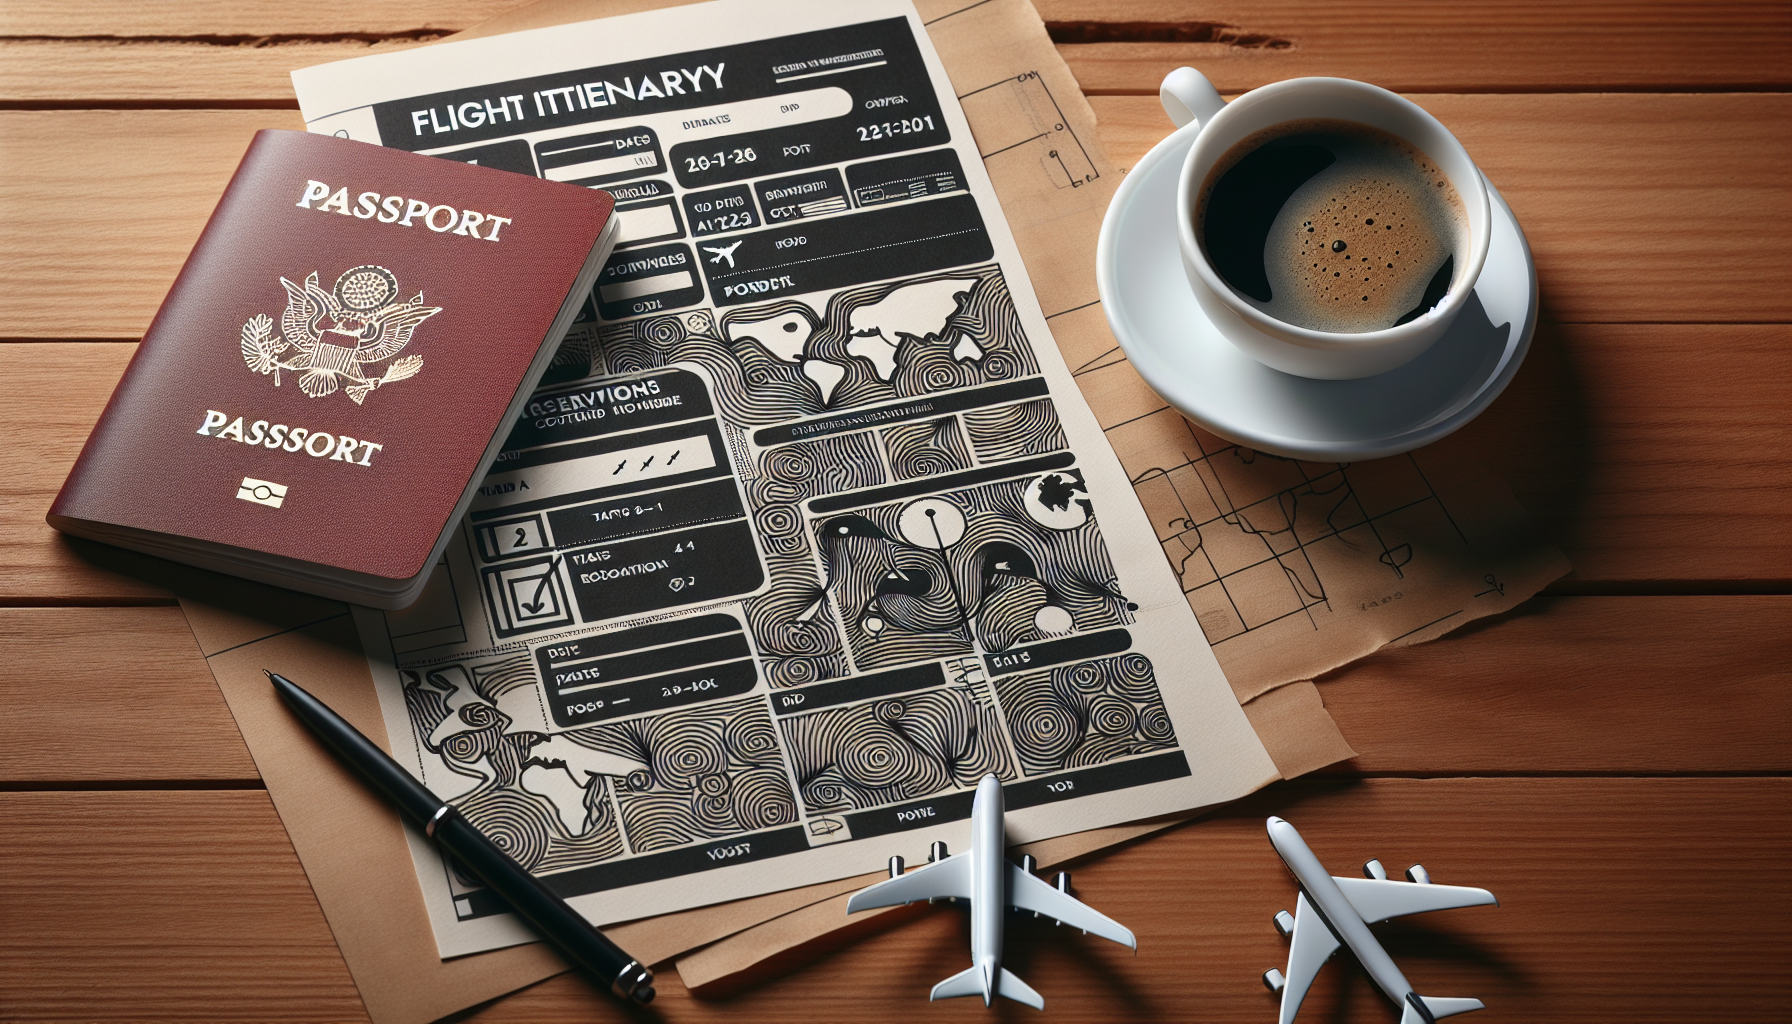 Illustration of a flight itinerary document